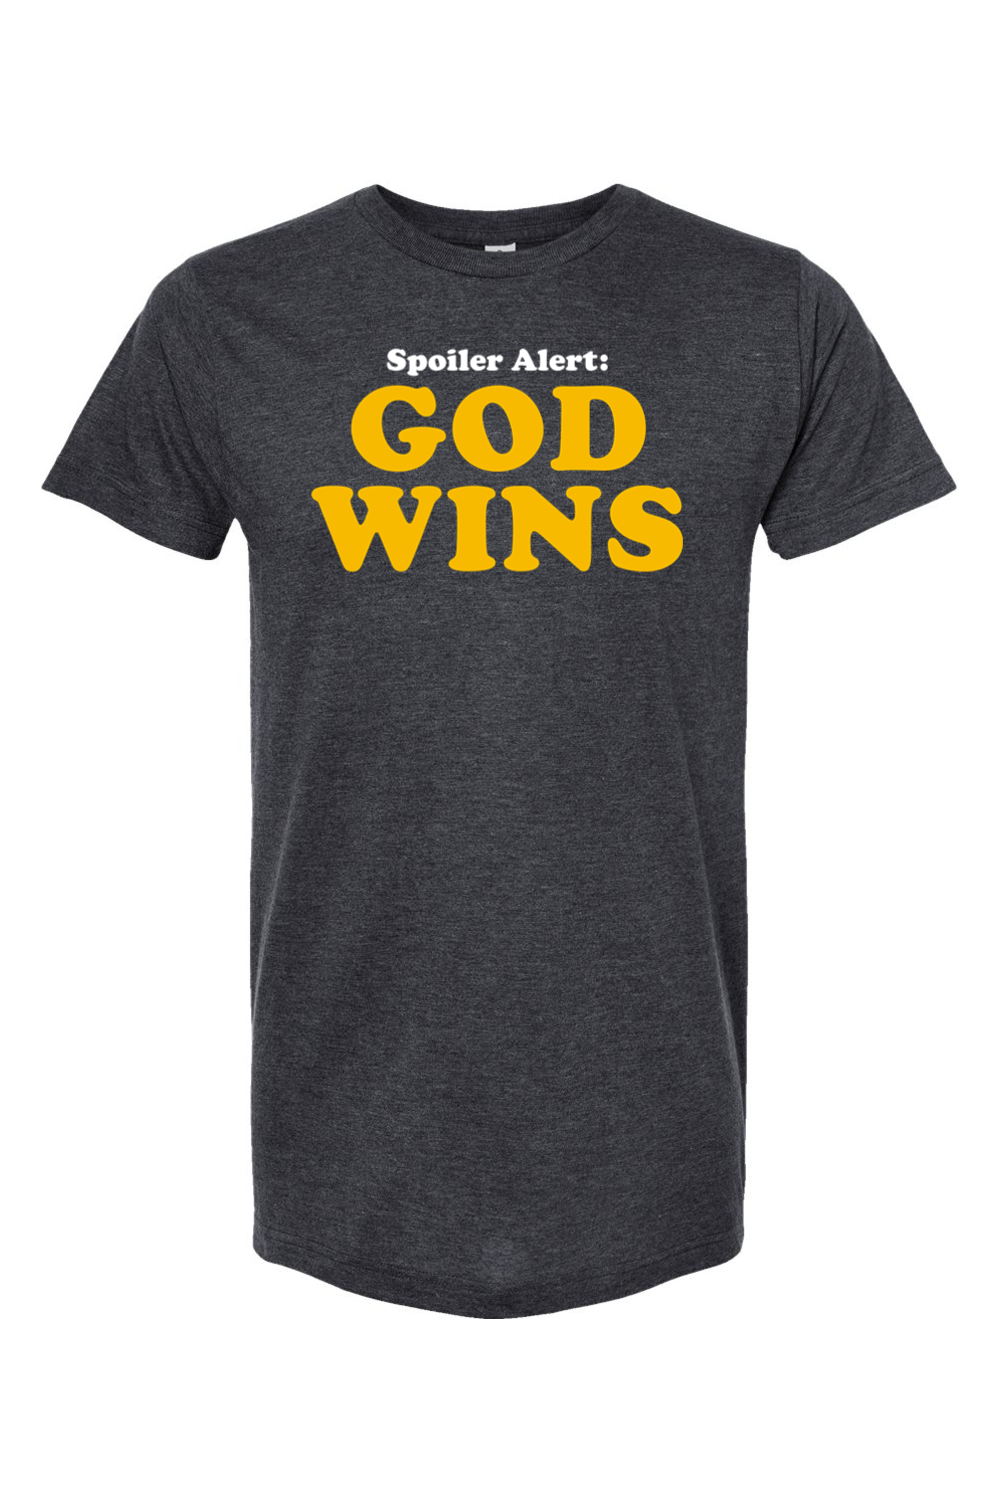 Spoiler Alert: God Wins - T-Shirt